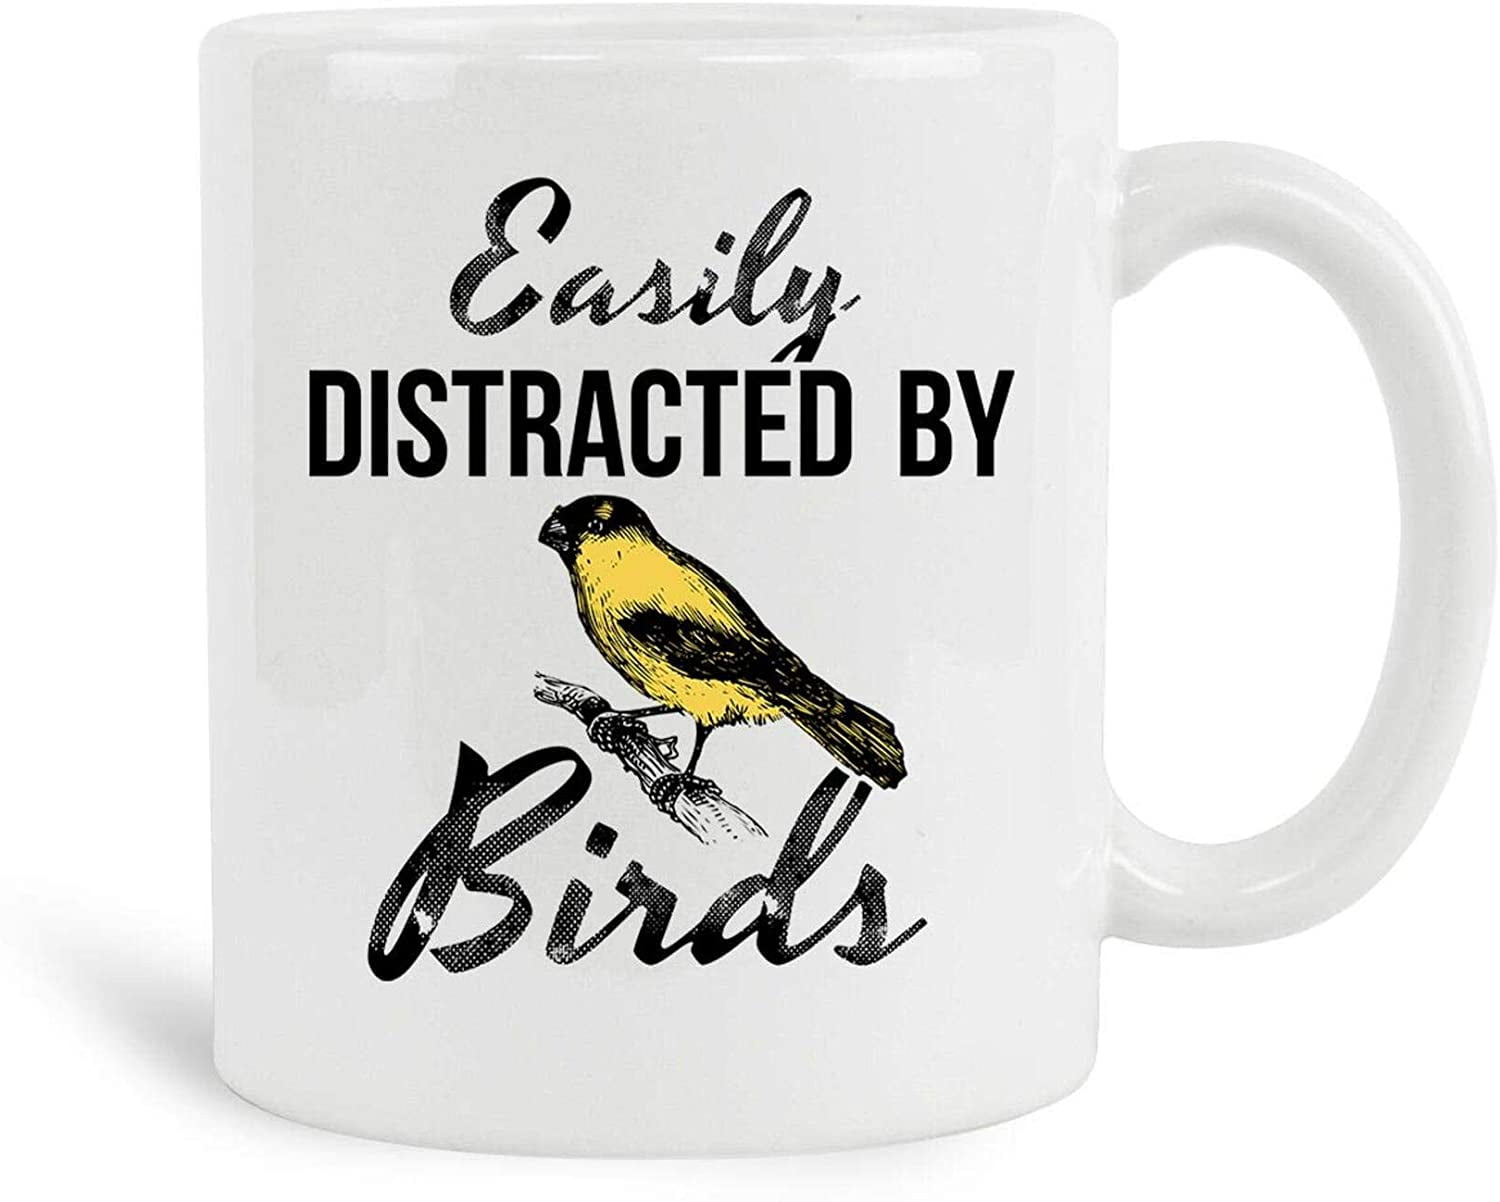 Easily Distracted by Birds Mug,11 oz White Coffee Mugs, Good Christmas Presents, Amazing Birding Coffee Tea Cups for Bird lovers, New Year Present